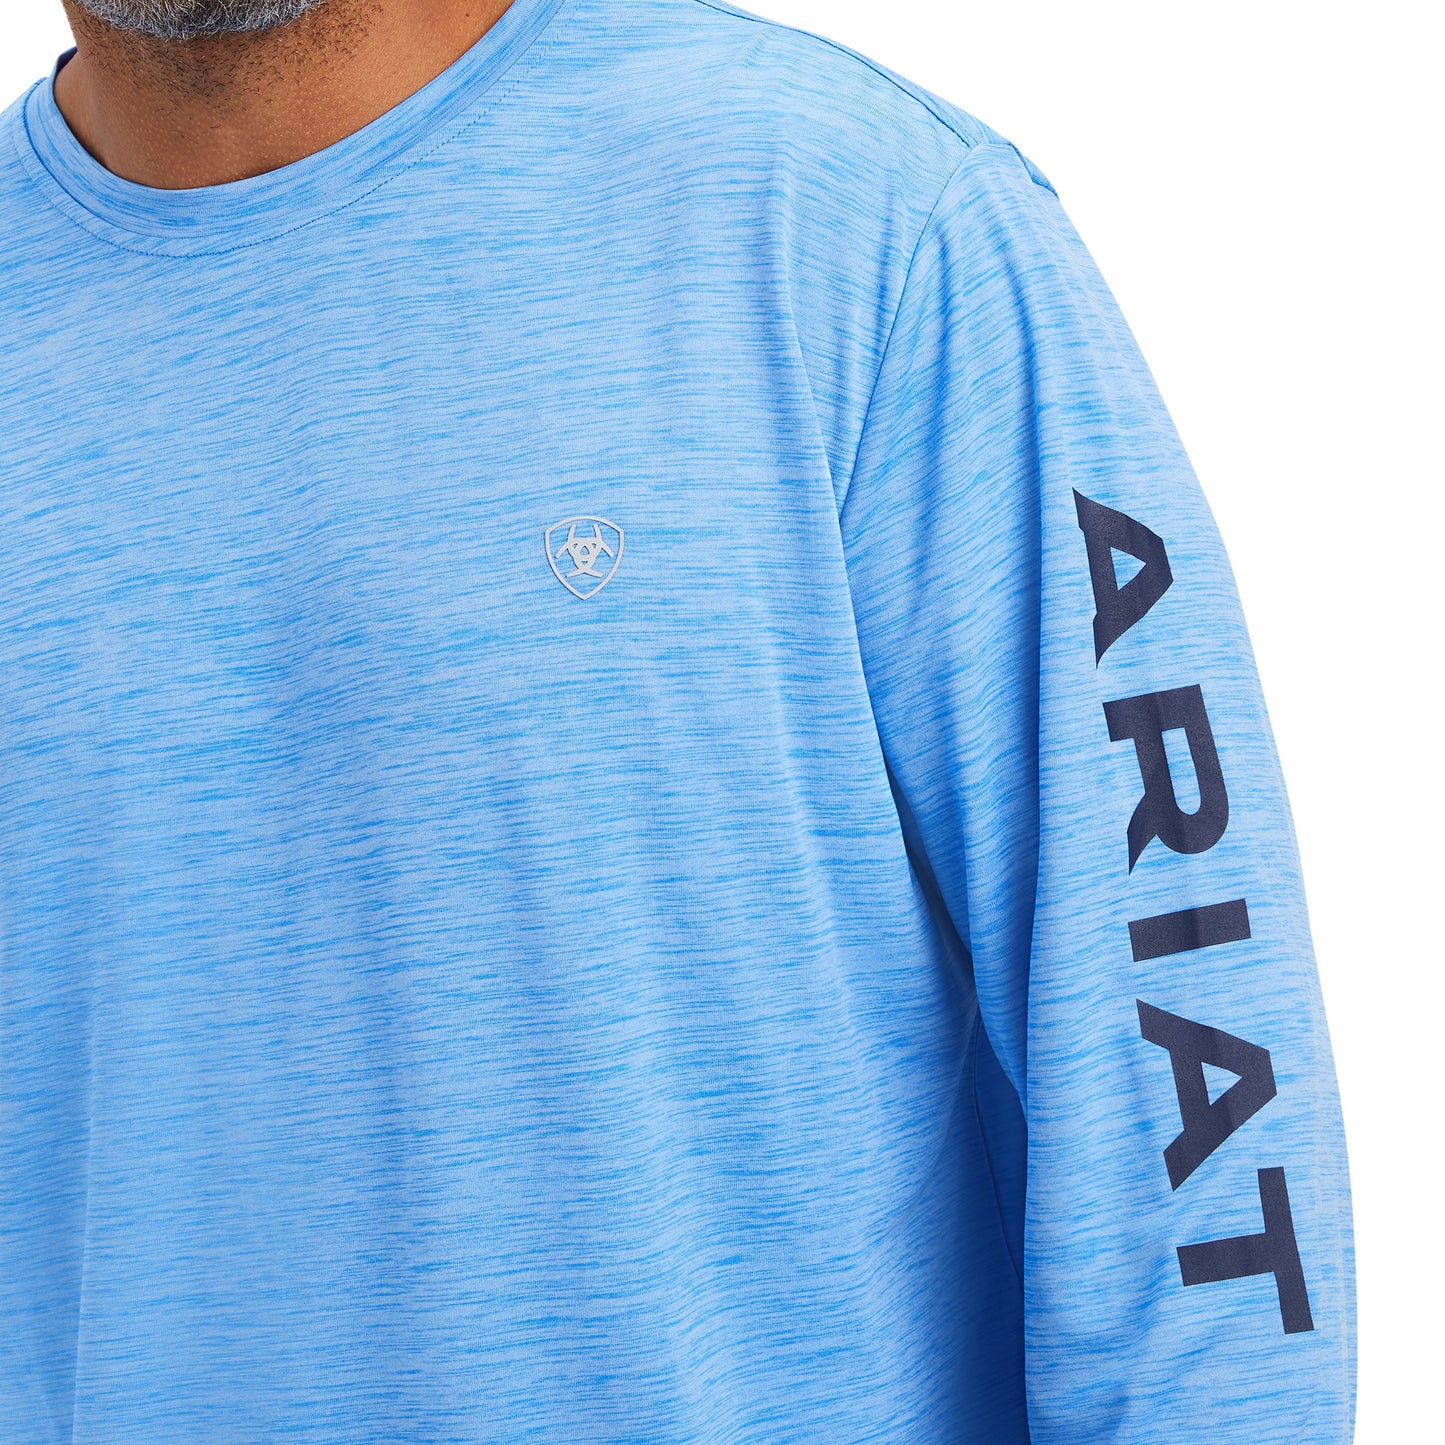 Ariat Men's Aegean Blue Charger Graphic T-Shirt 10041002